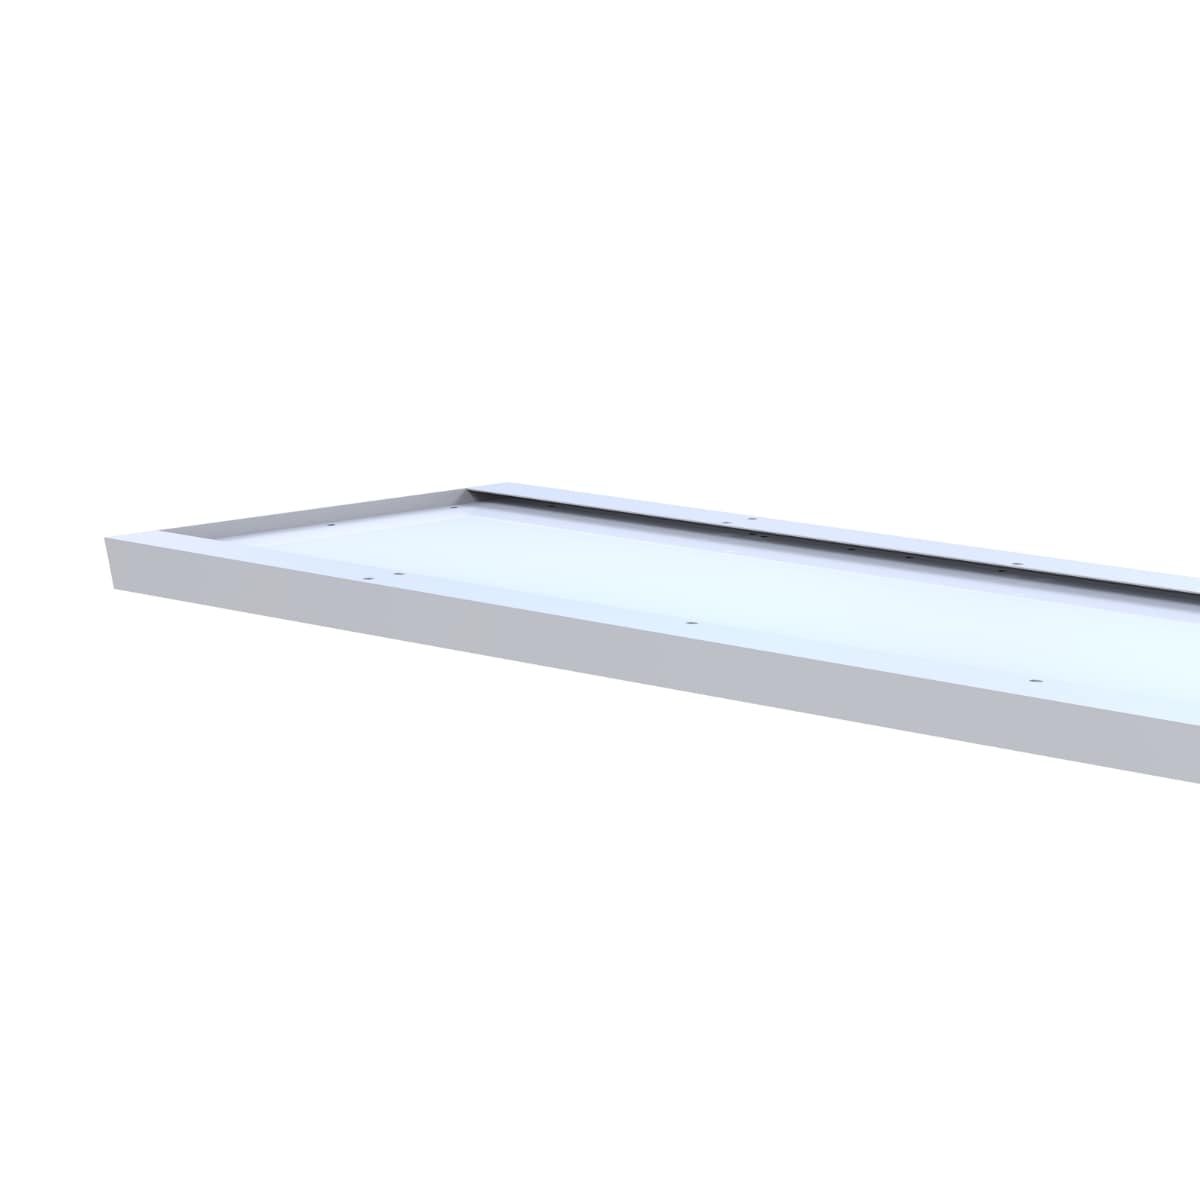 LED-Panel MULTI - Aufputzrahmen silber 1245 x 308 x 5 mm flach